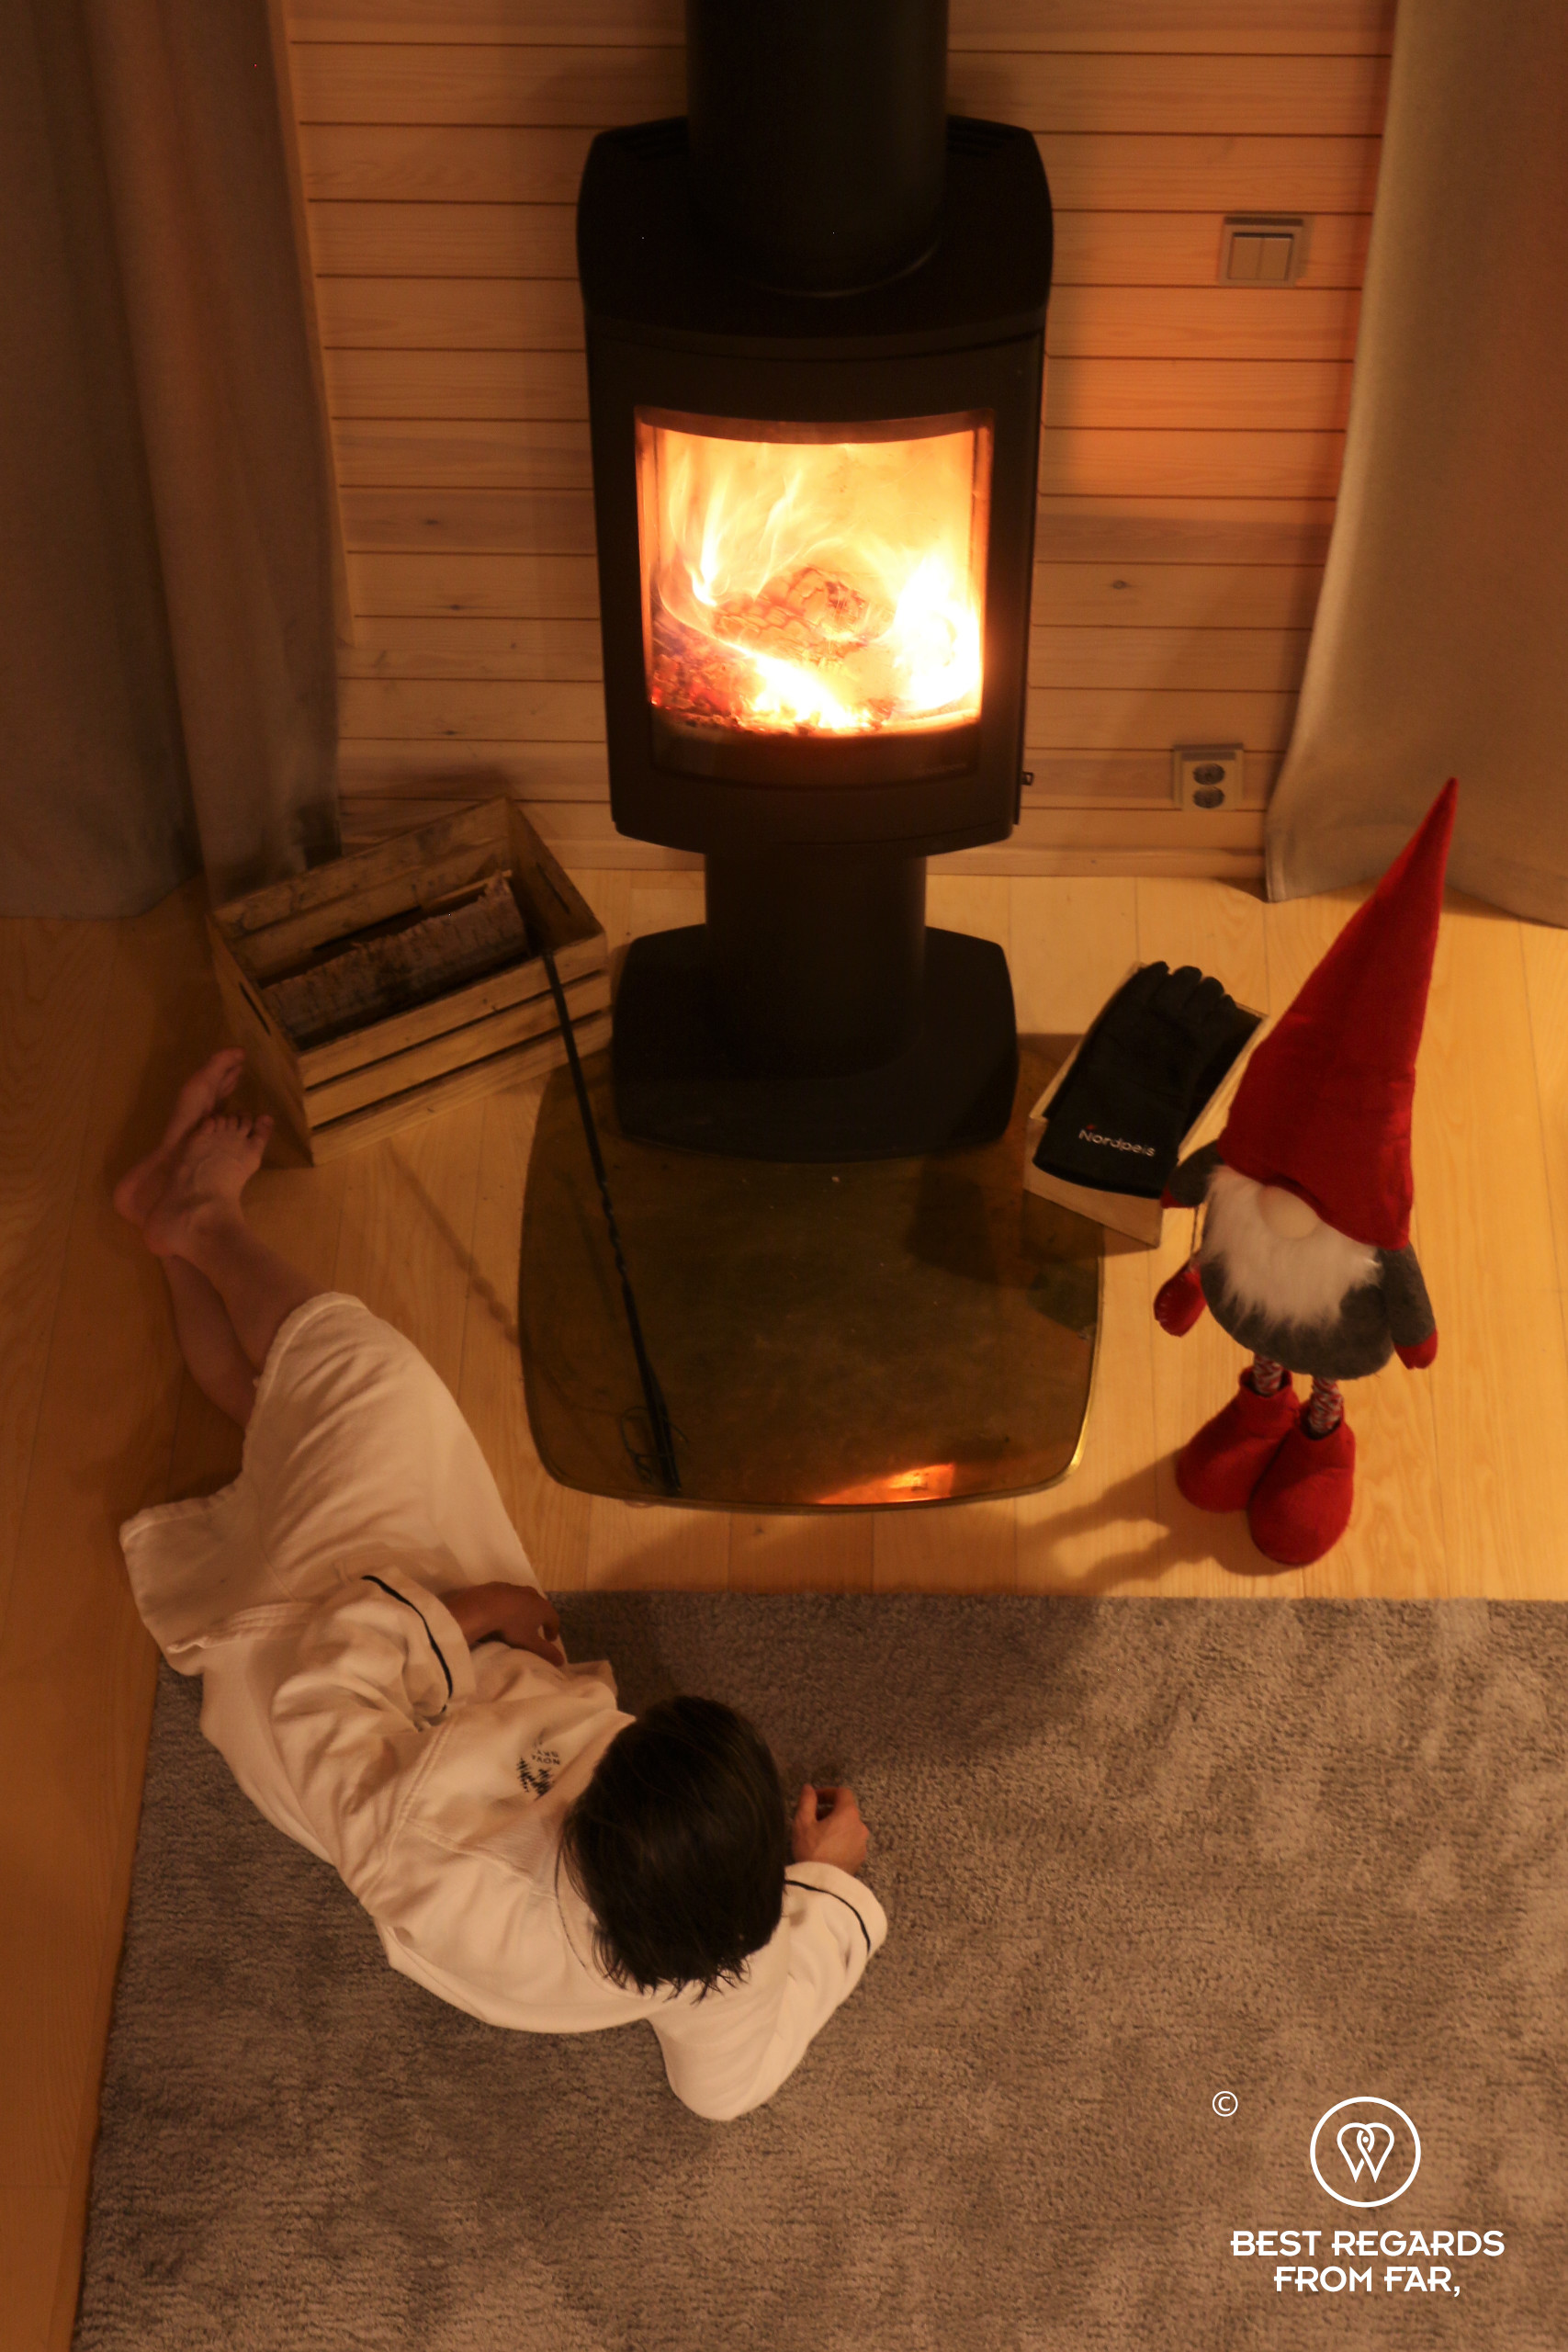 By the fire place with Santa at Nova skyland hotel, Rovaniemi